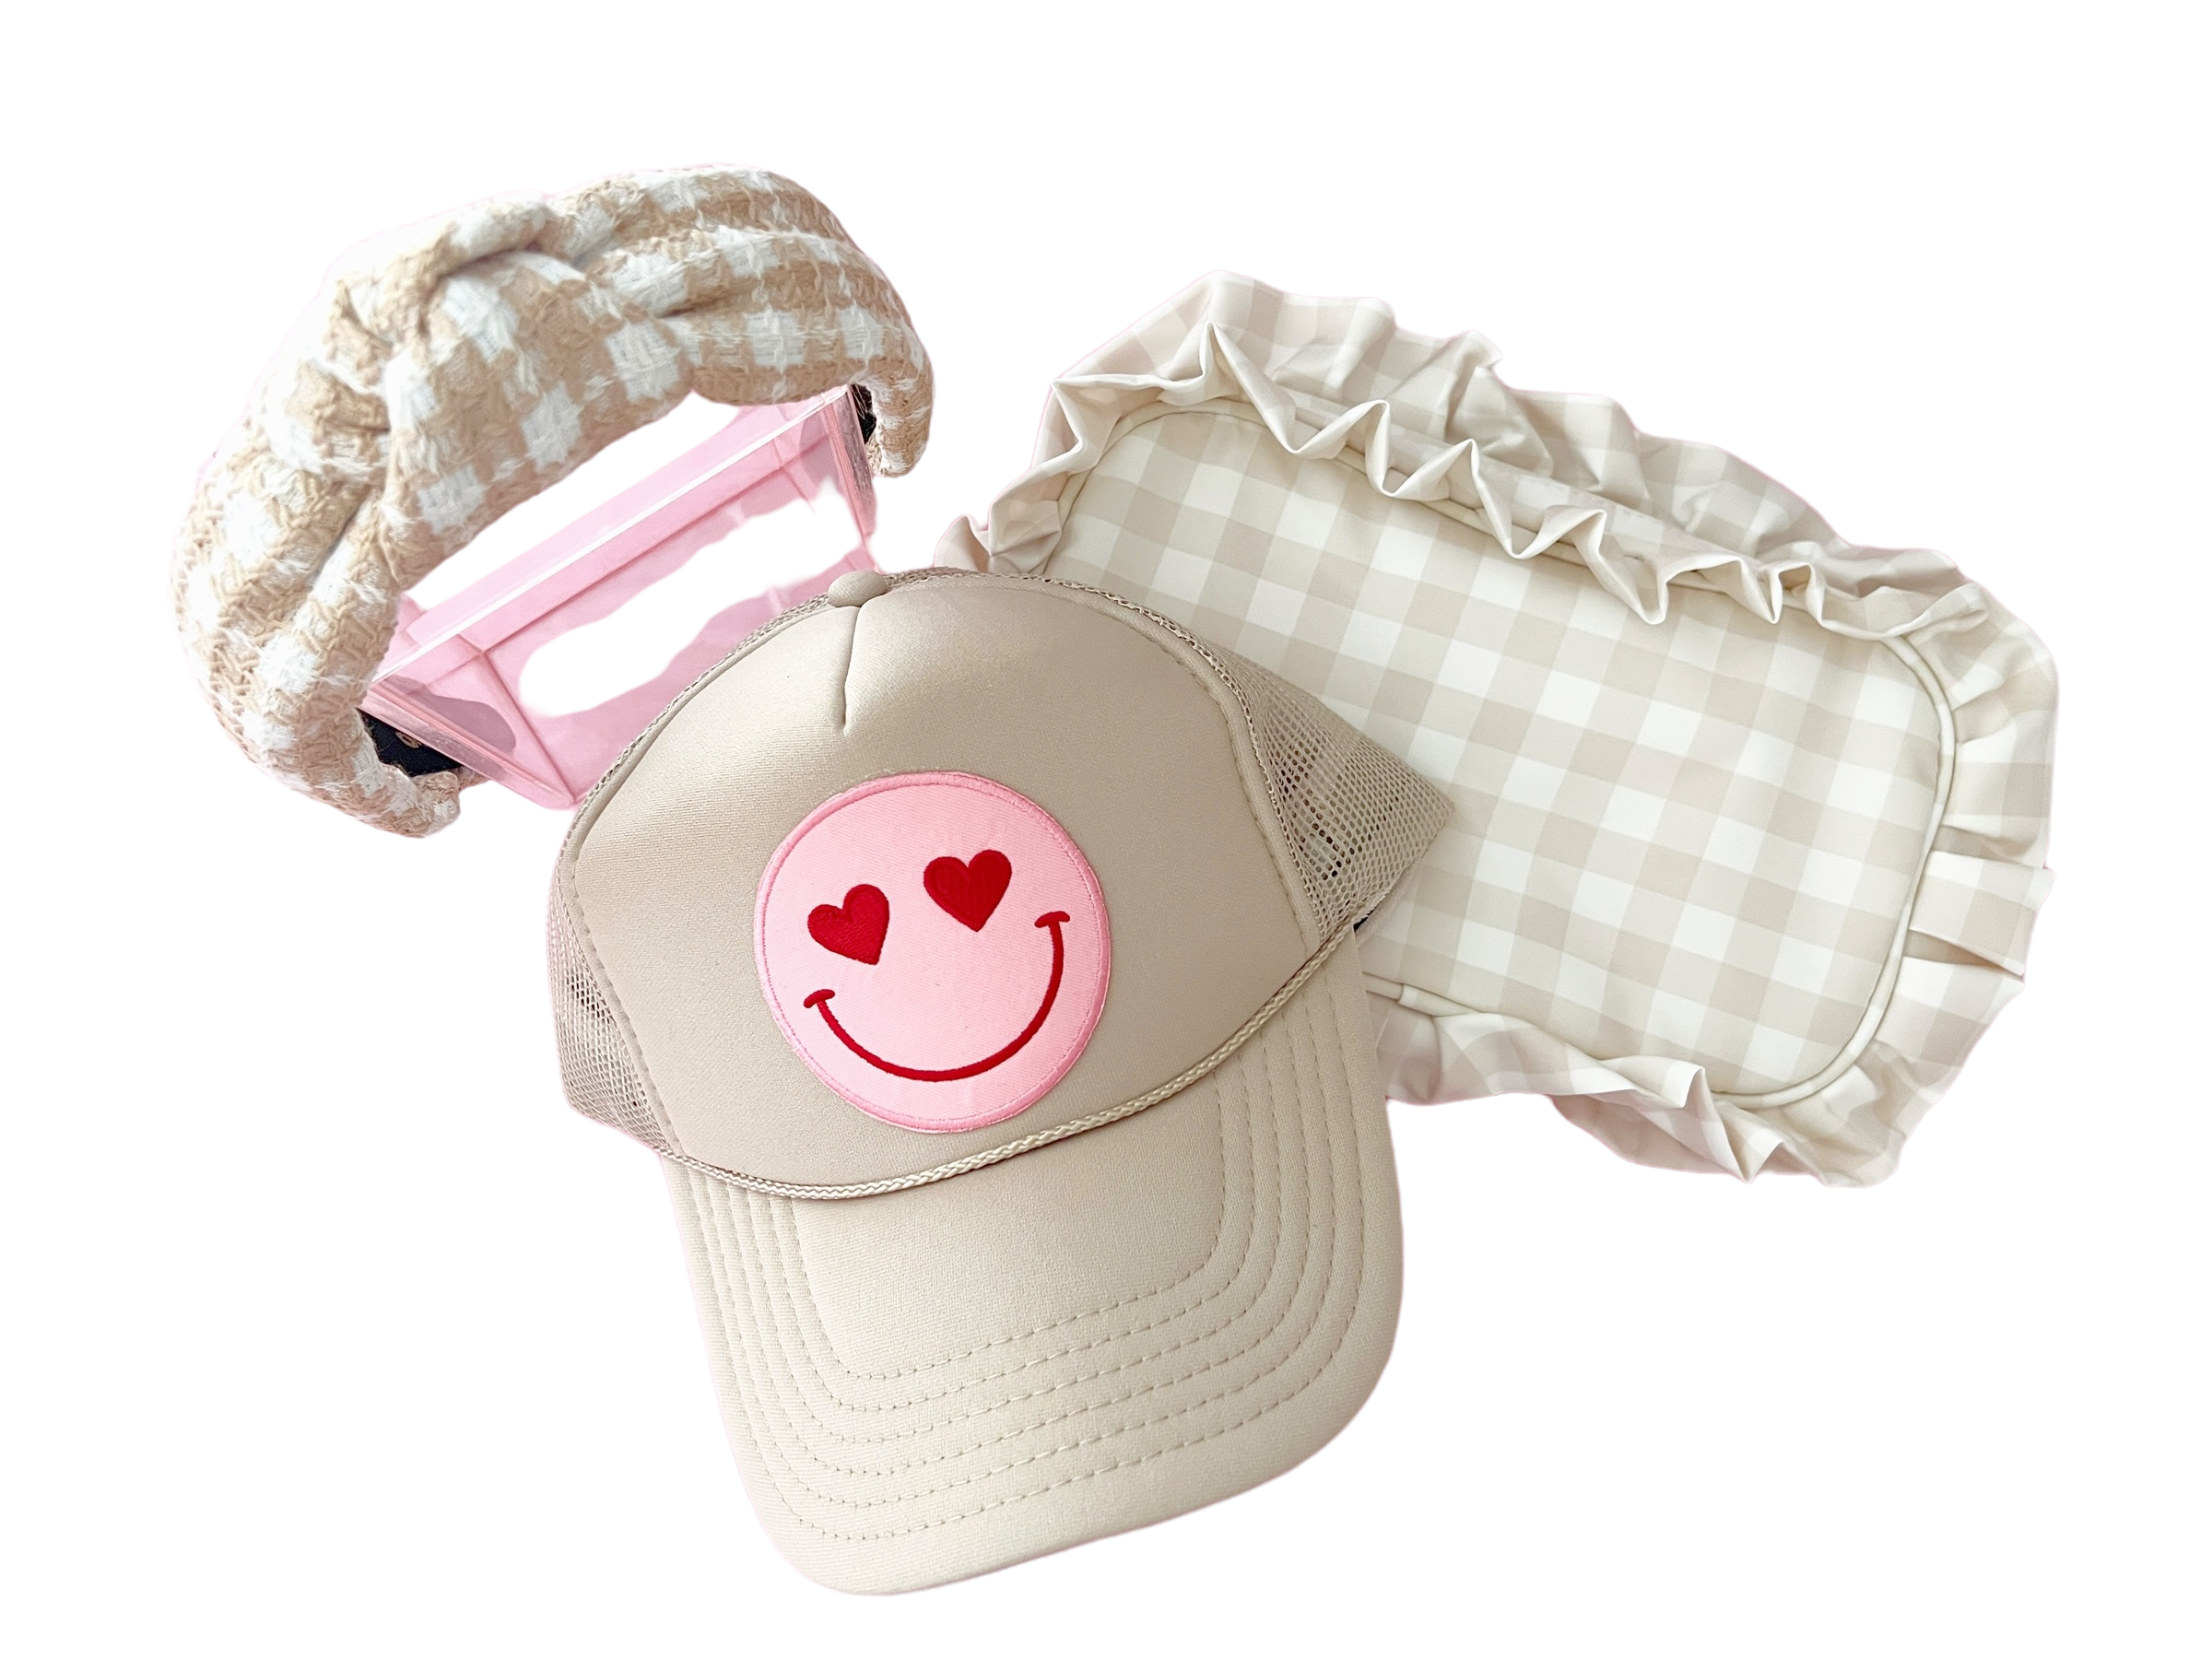 Happy Heart Trucker Hat by Confettees - Sand